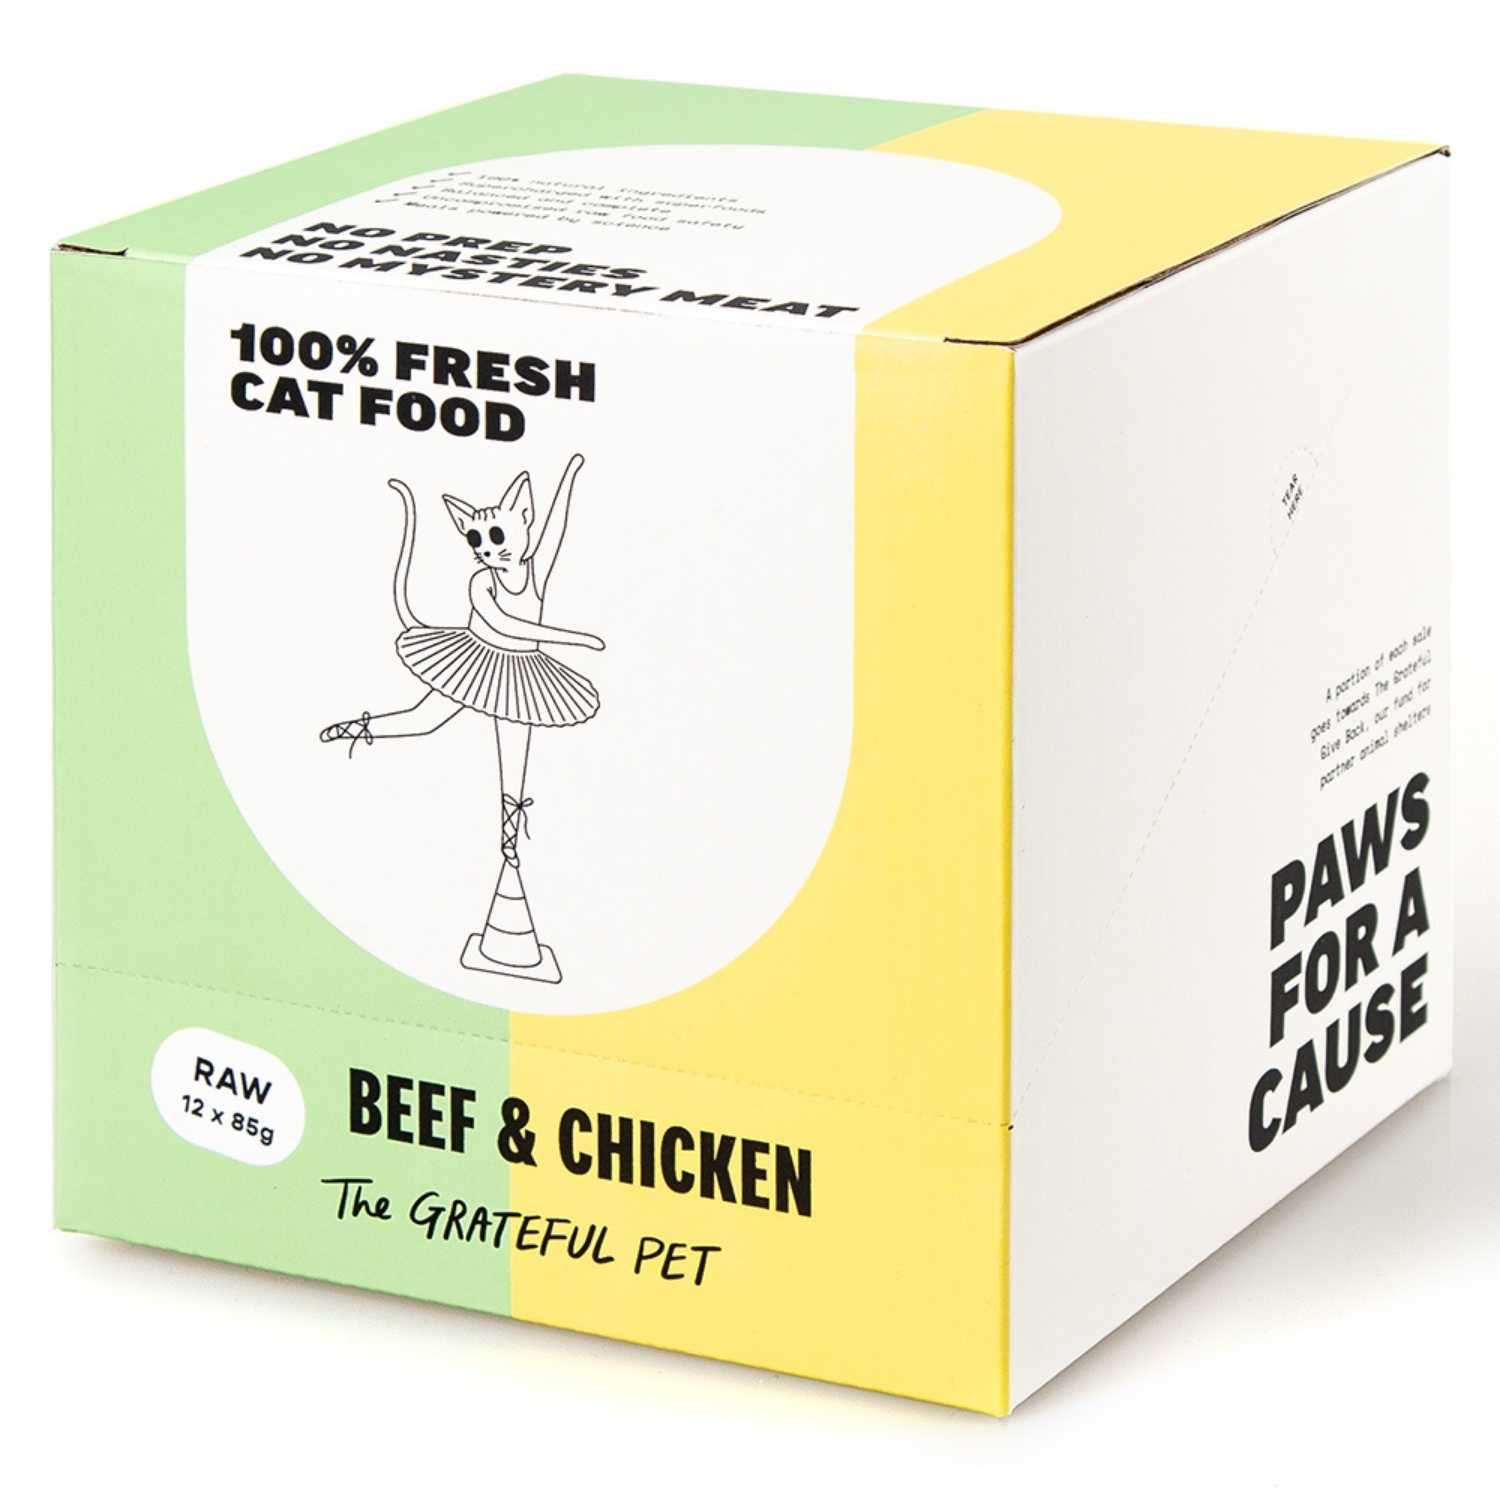 The Grateful Pet - Raw (Beef & Chicken) - Cat (12 x 85g Tub) Food (Case)